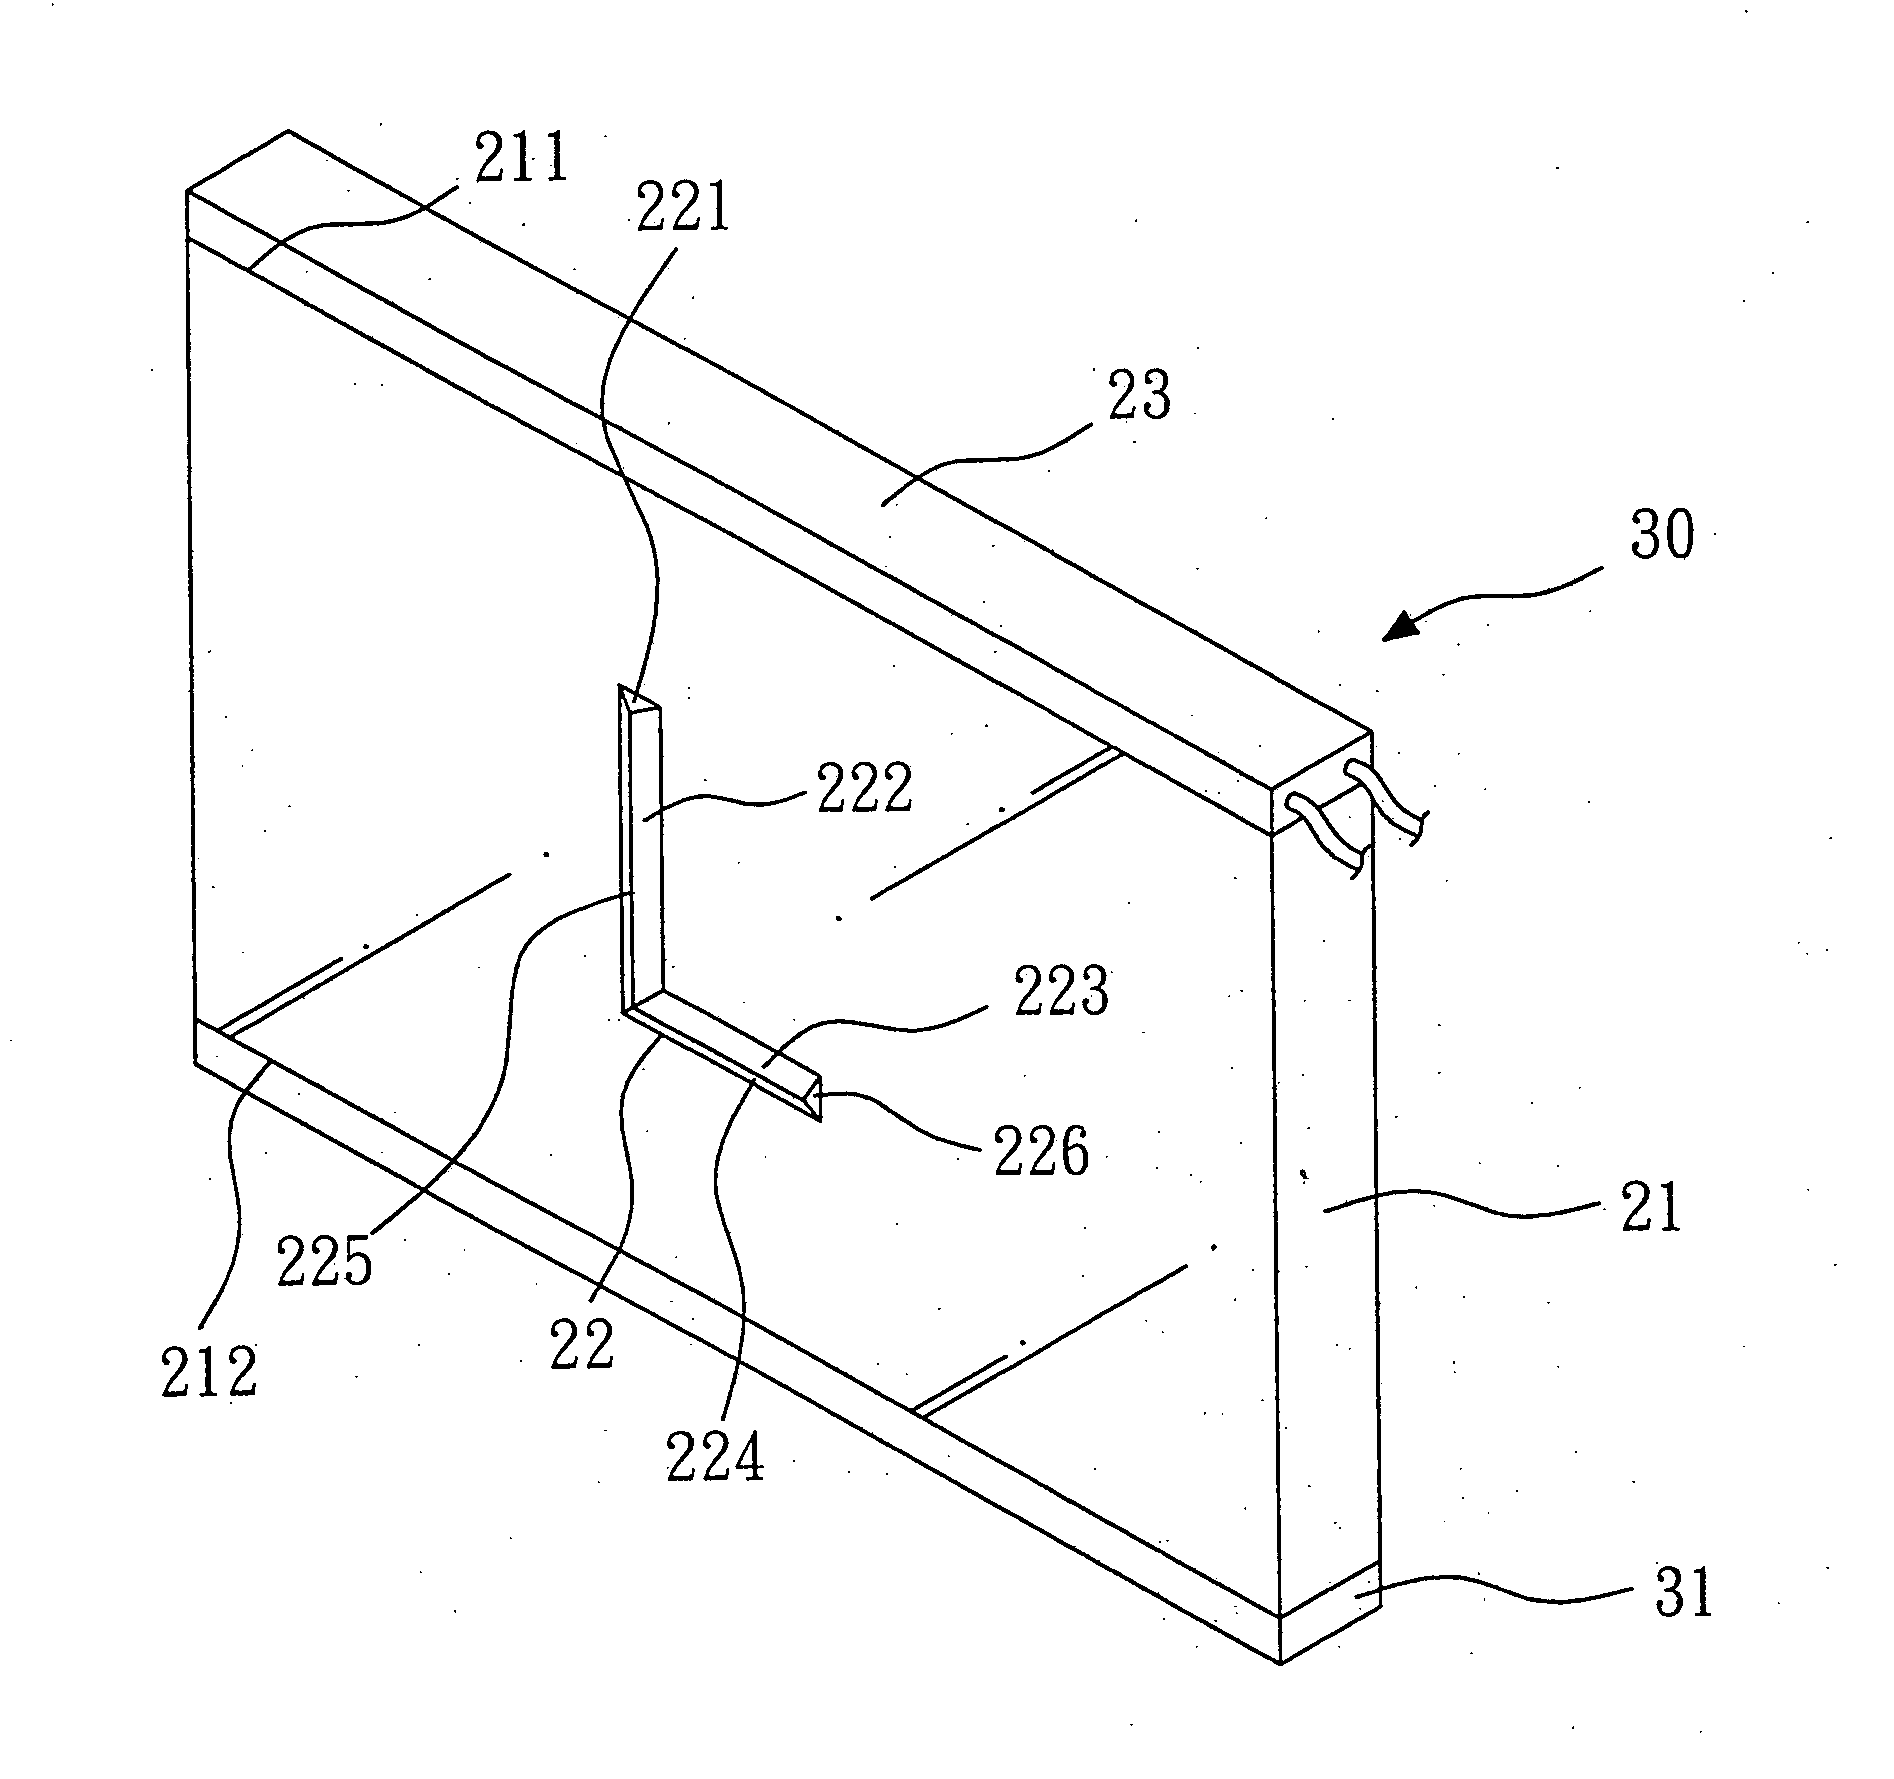 Transparent light-conducting module